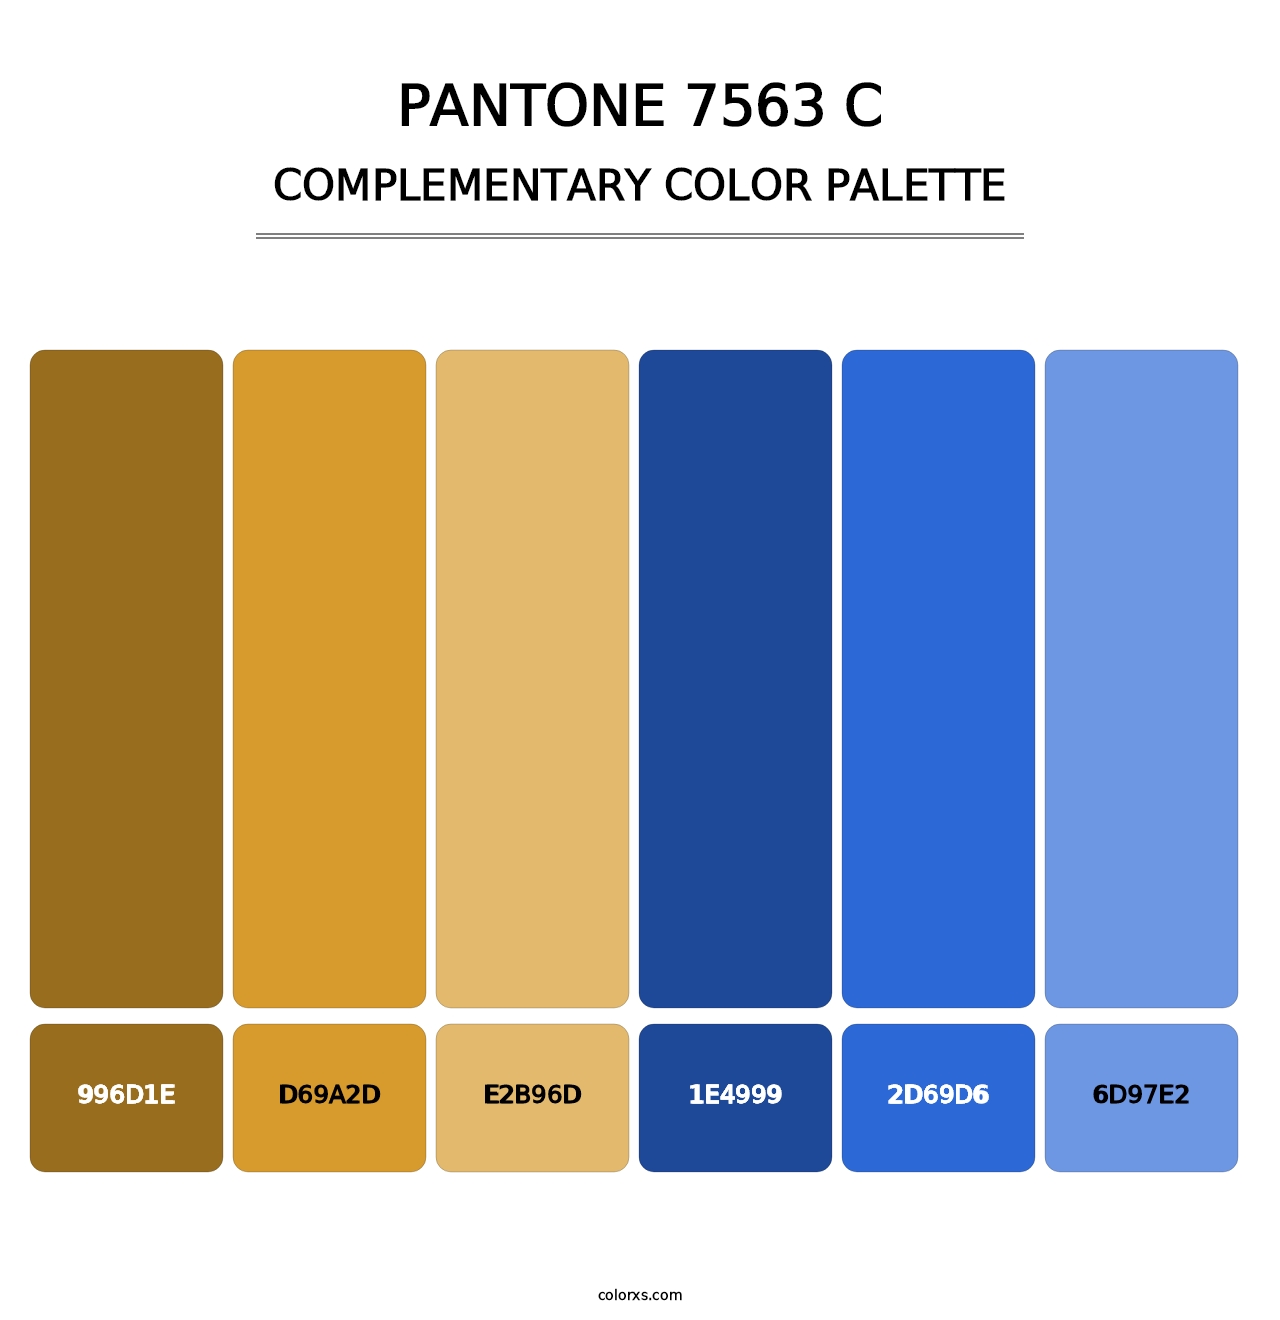 PANTONE 7563 C - Complementary Color Palette